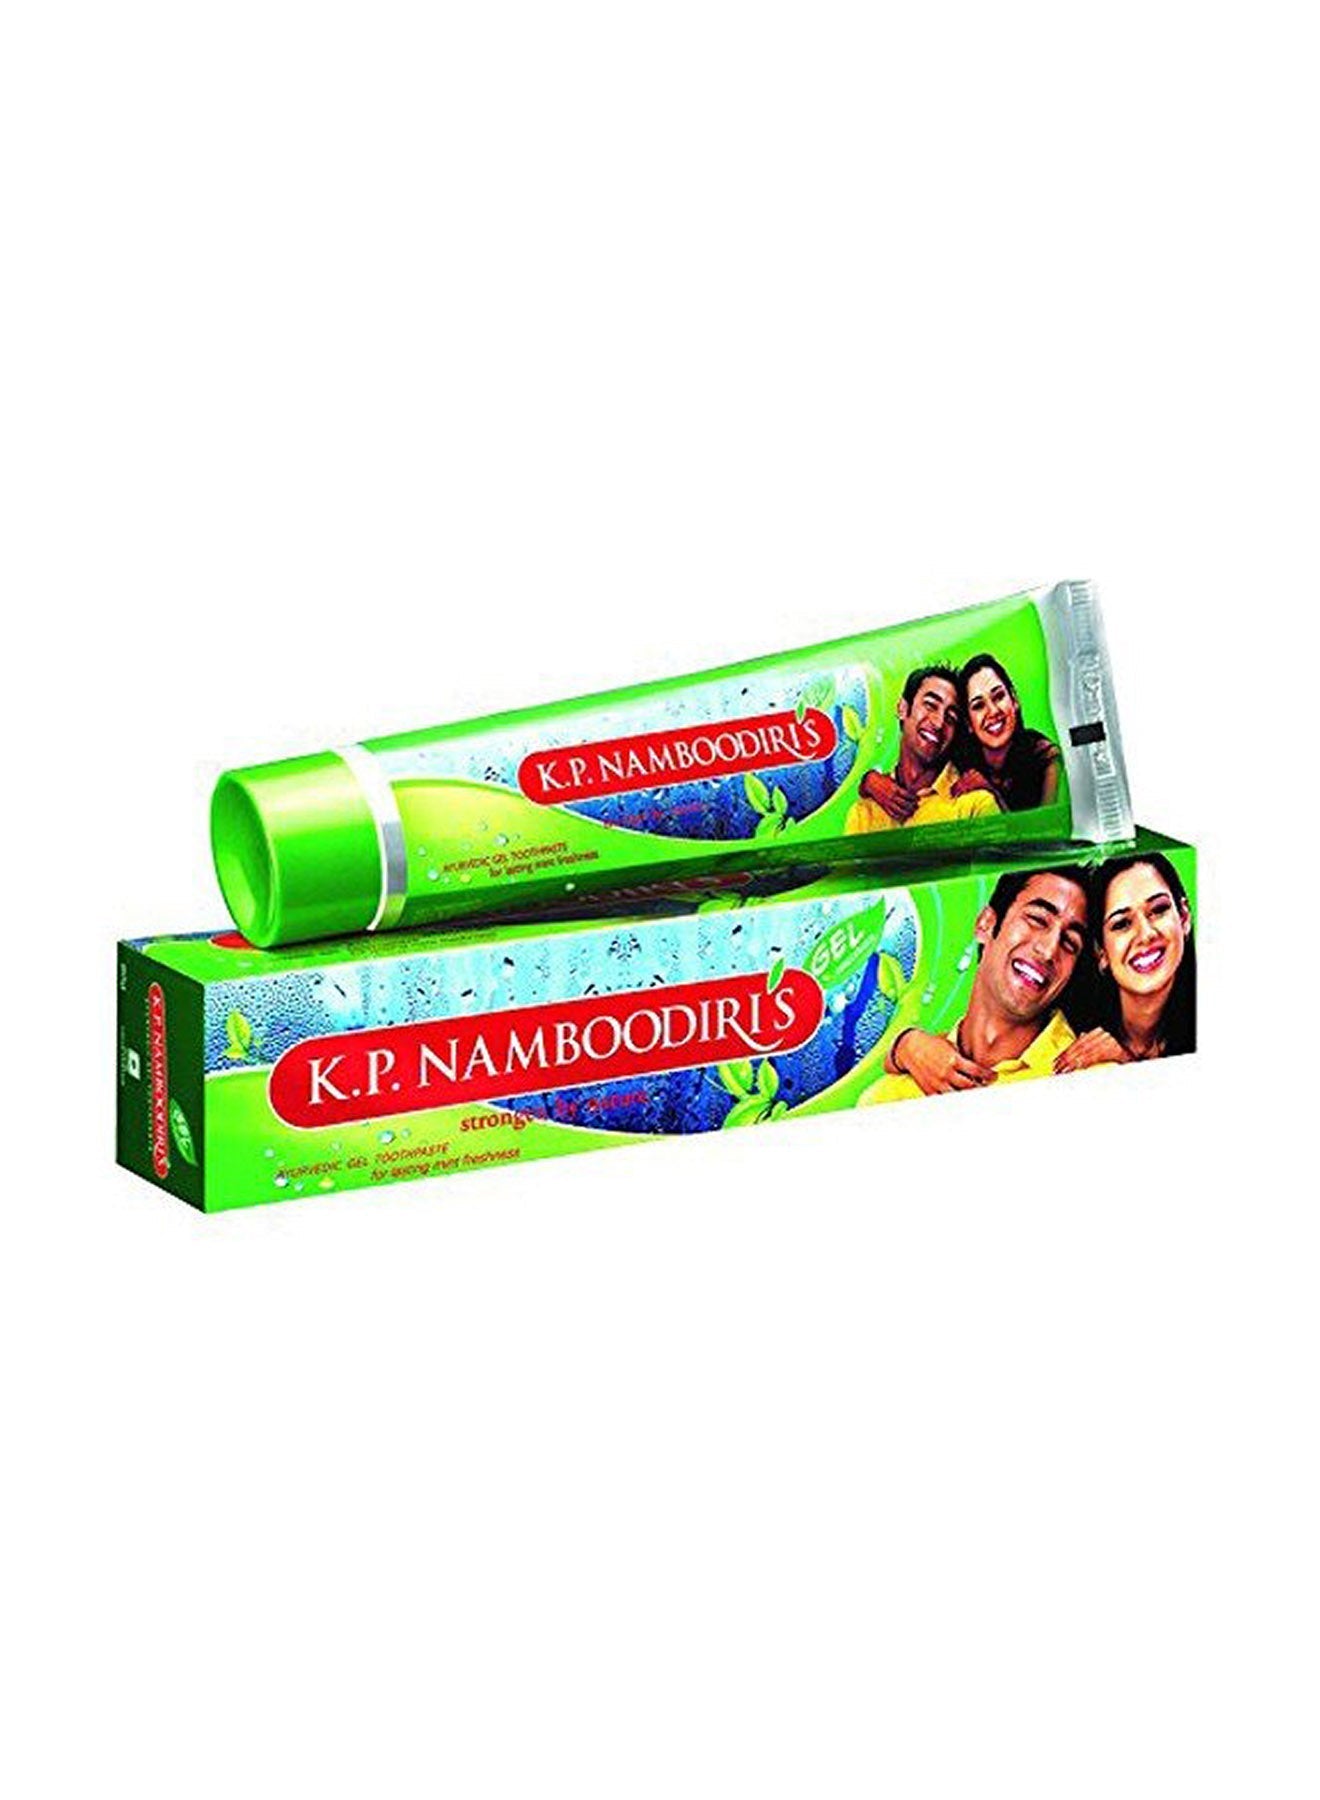 KP Namboodiris Toothpaste gel 80ml